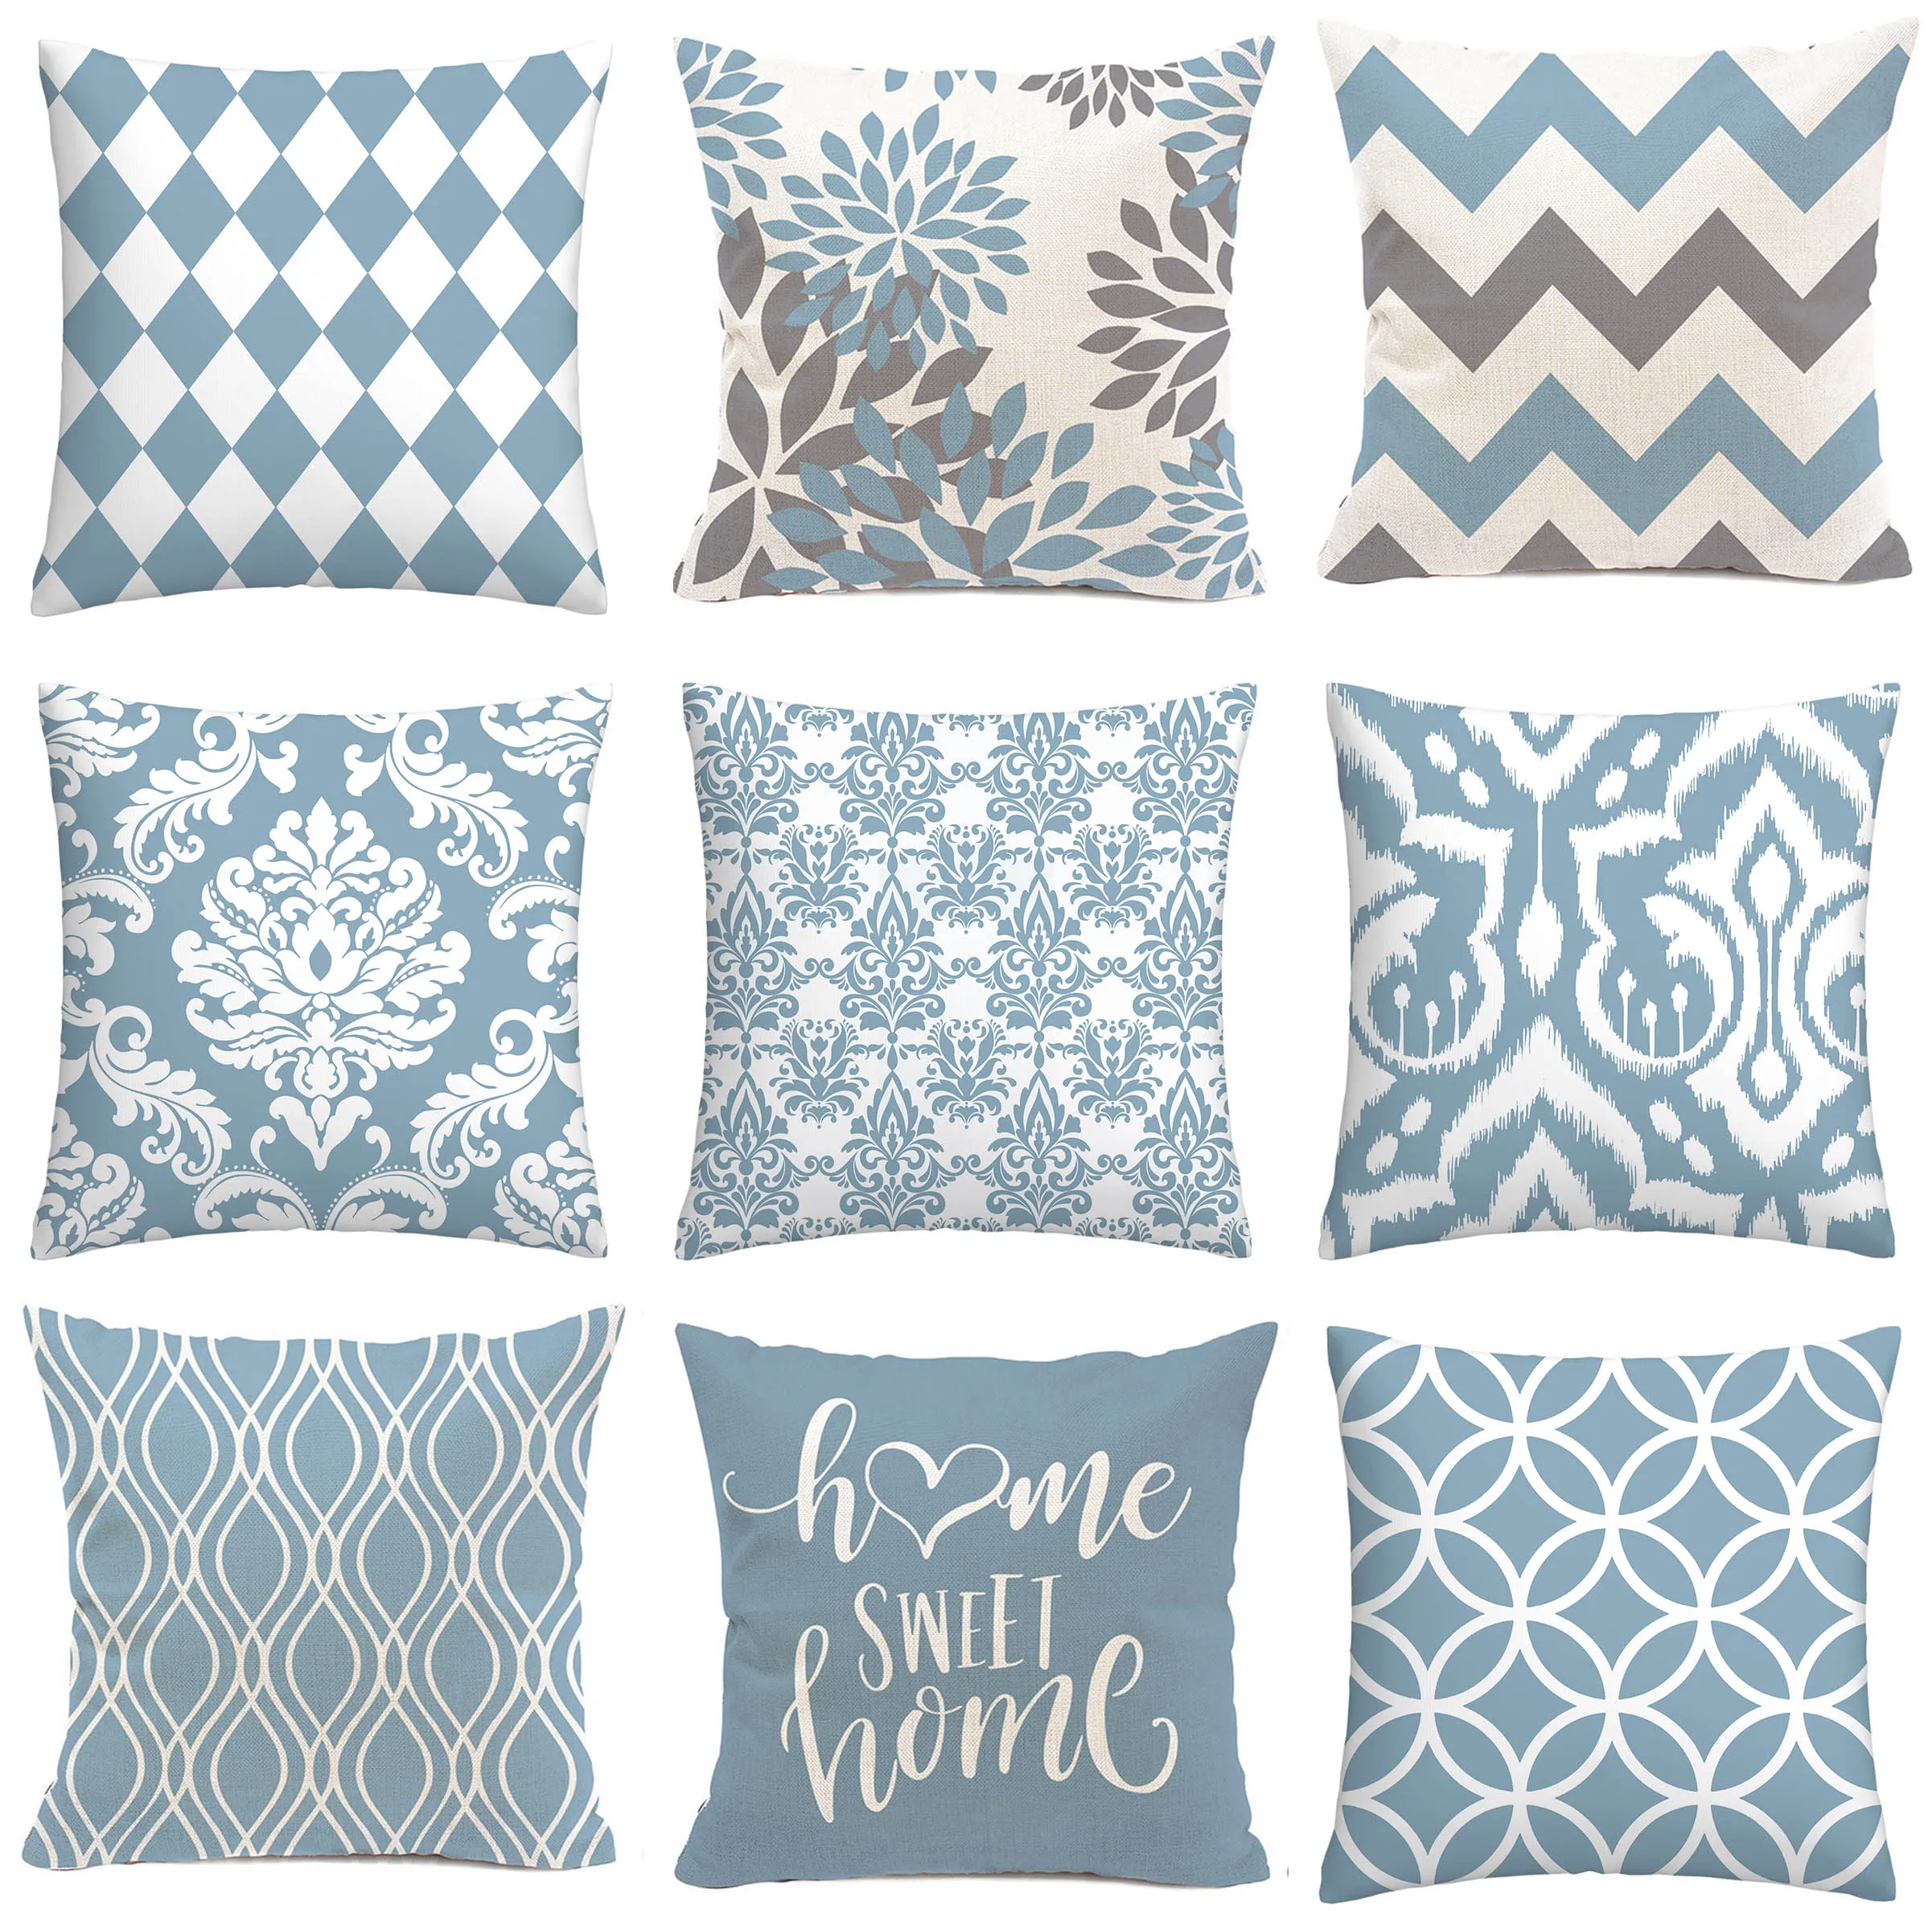 

45x45cm Lake Blue White Geometric Print Polyester Throw Pillow Cover Sofa Cushion Cover Home Cushion Decorative Pillow Cover